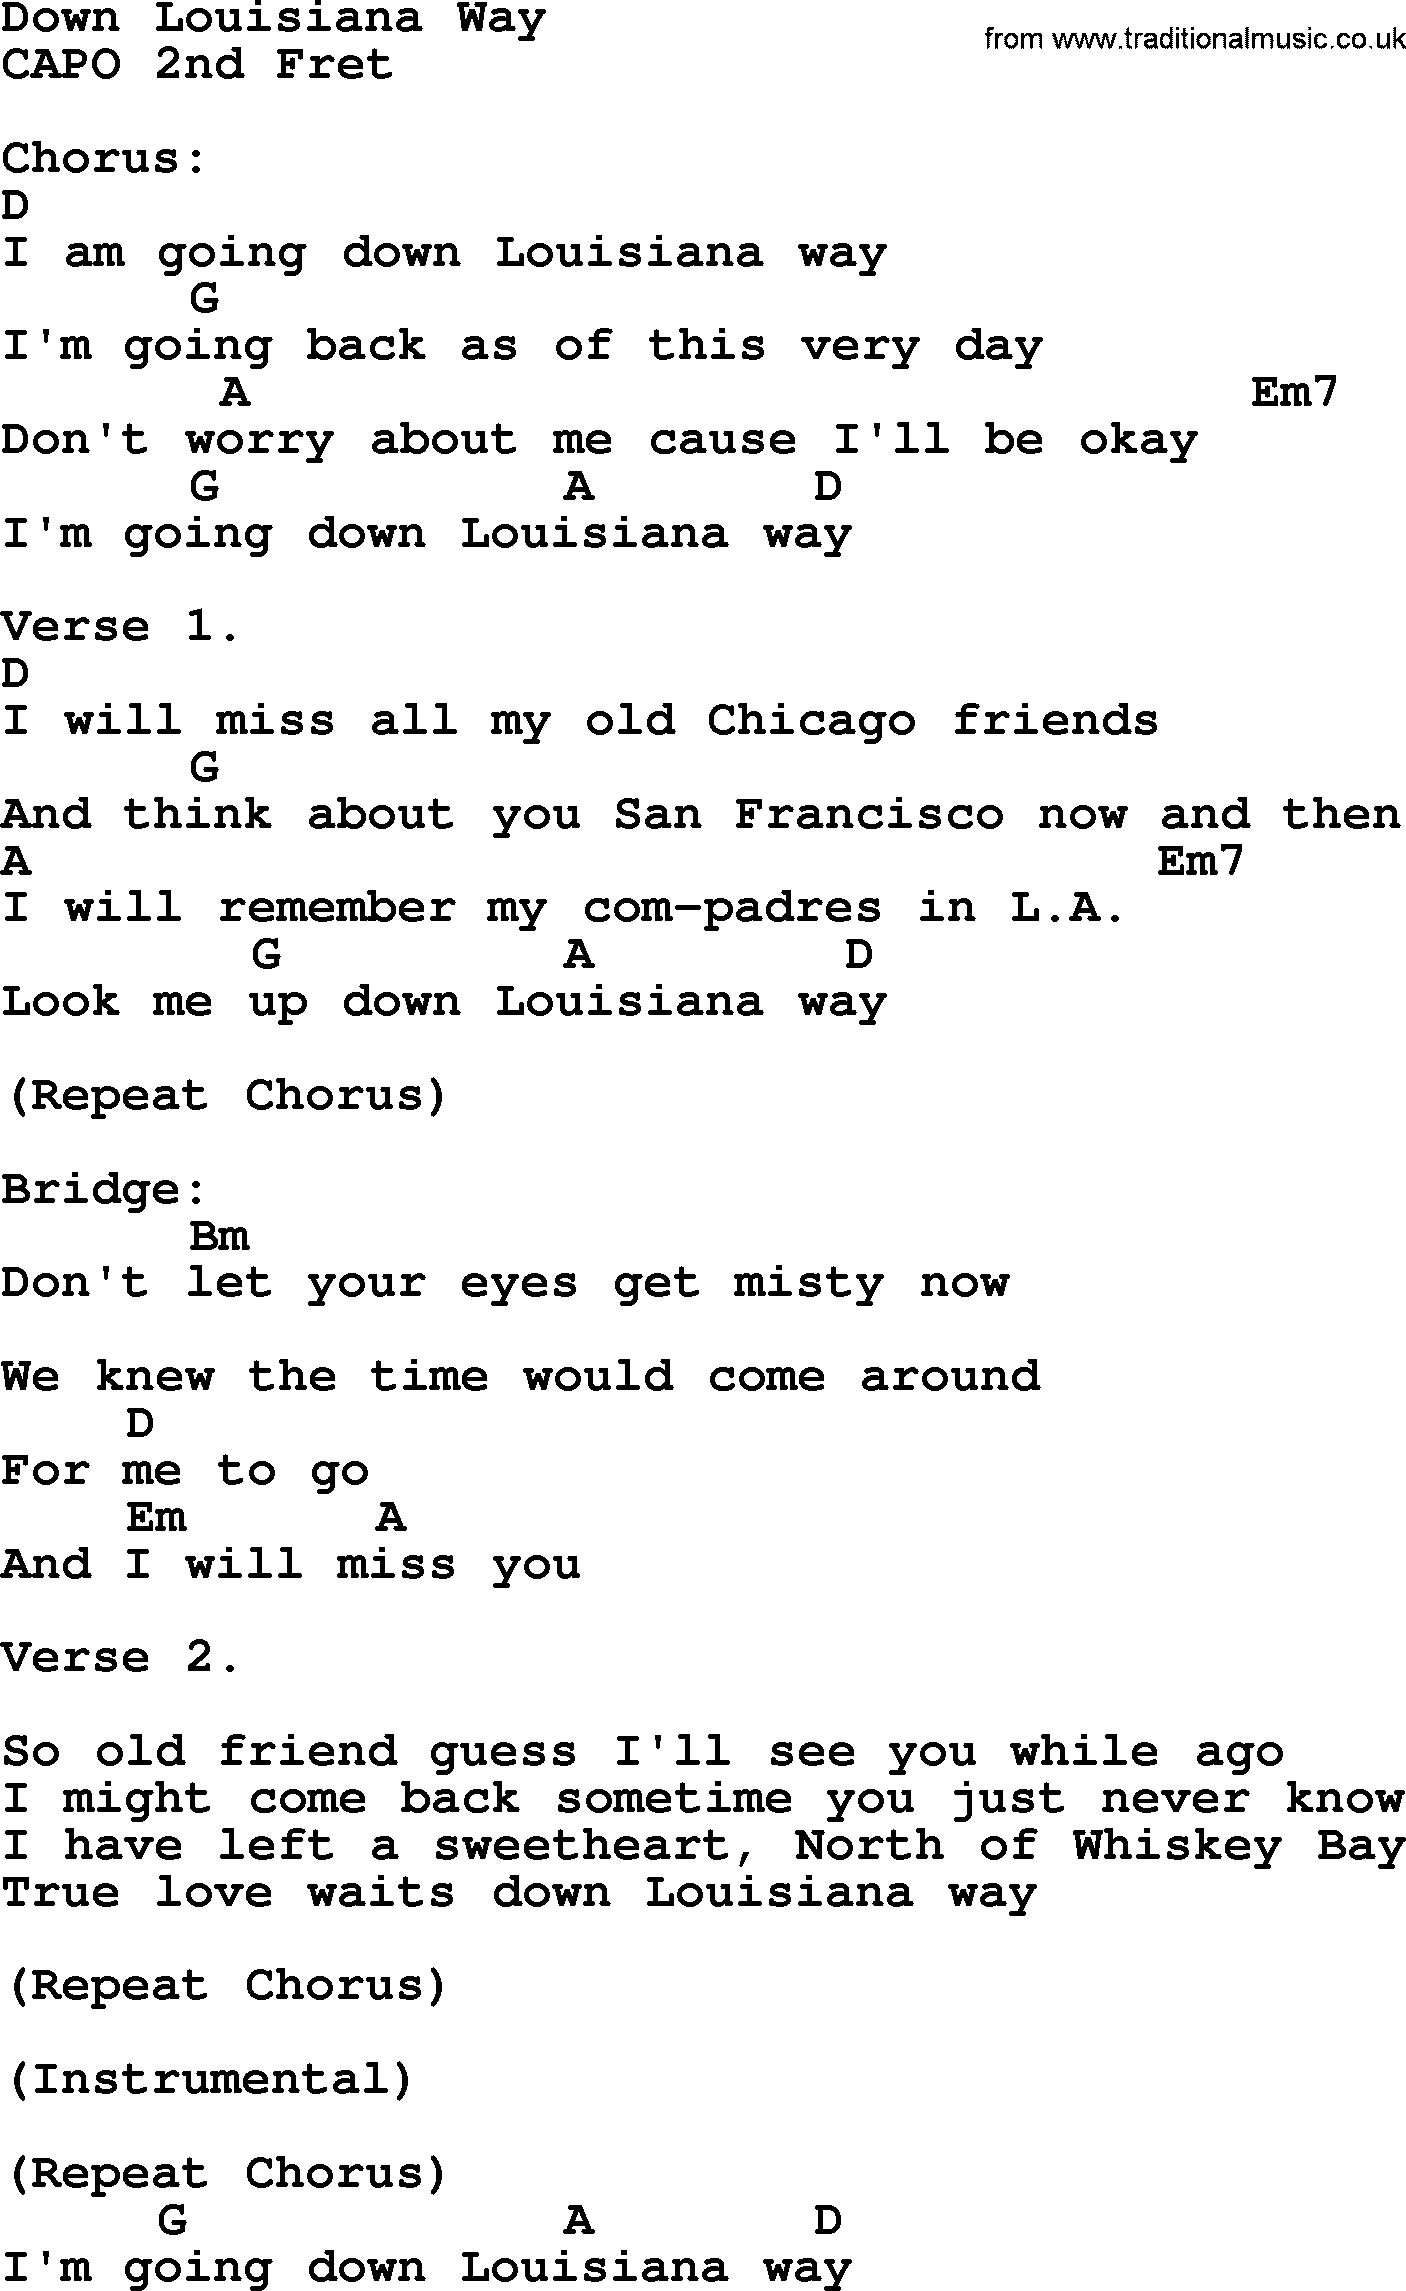 George Strait song: Down Louisiana Way, lyrics and chords